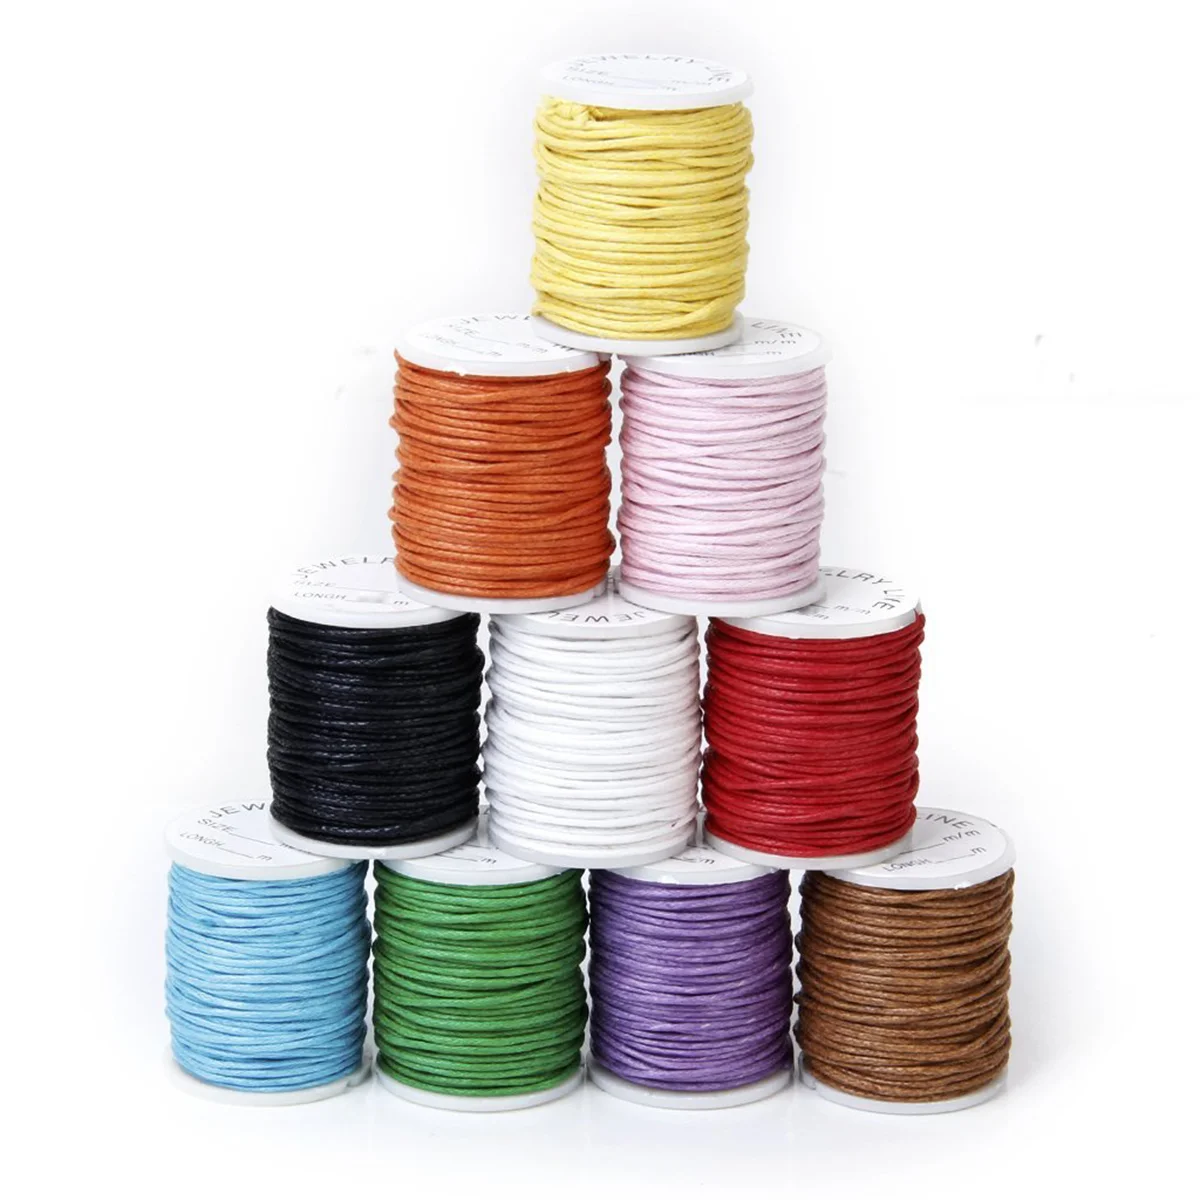 

10 Rolls 1mm Waxed Nylon Hand Knitting Cord String Beading Thread (Random Color) Chinese